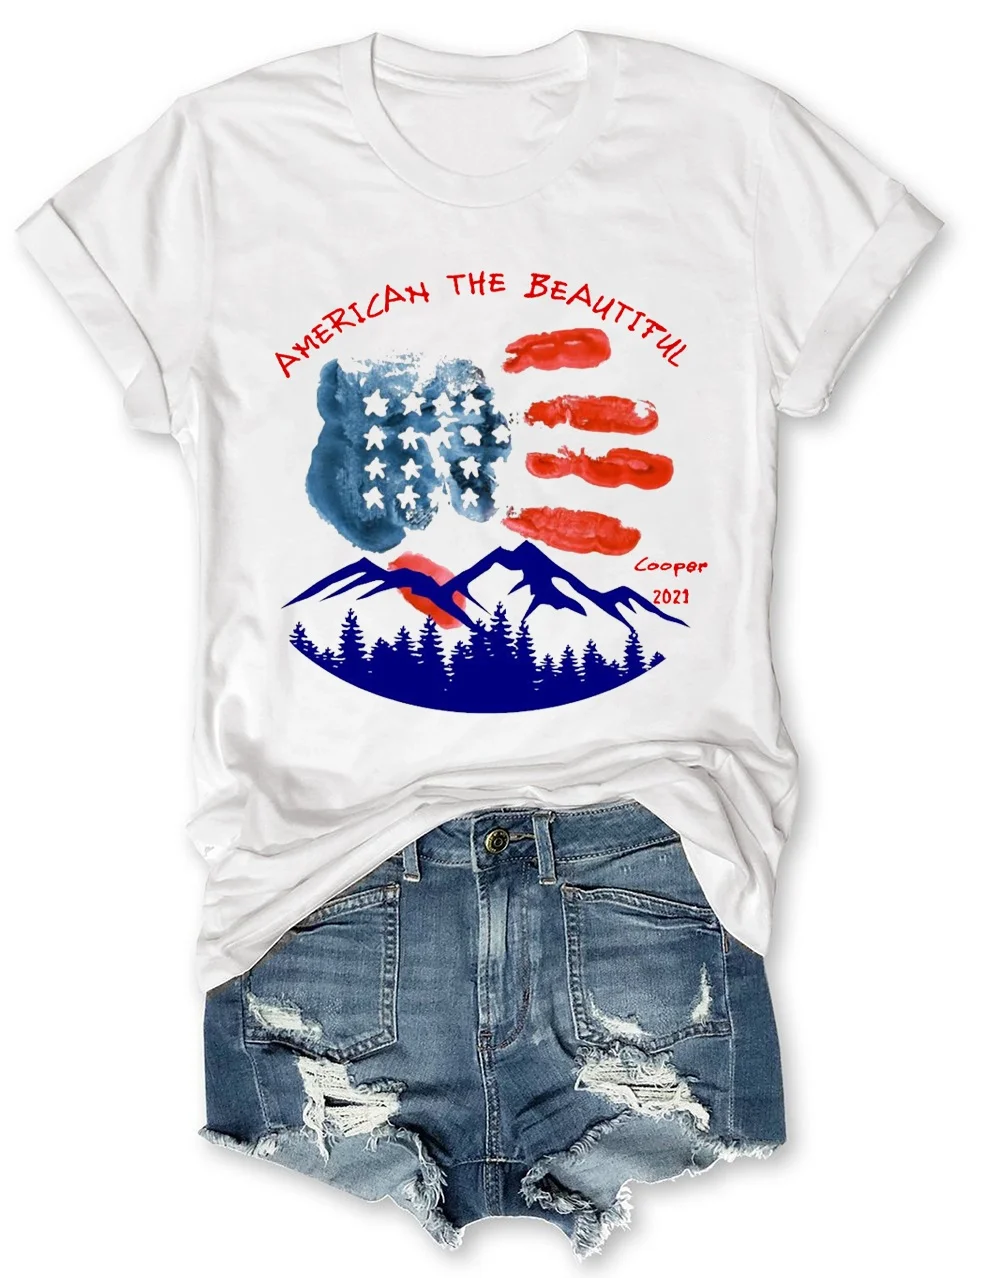 America the Beautiful T-Shirt